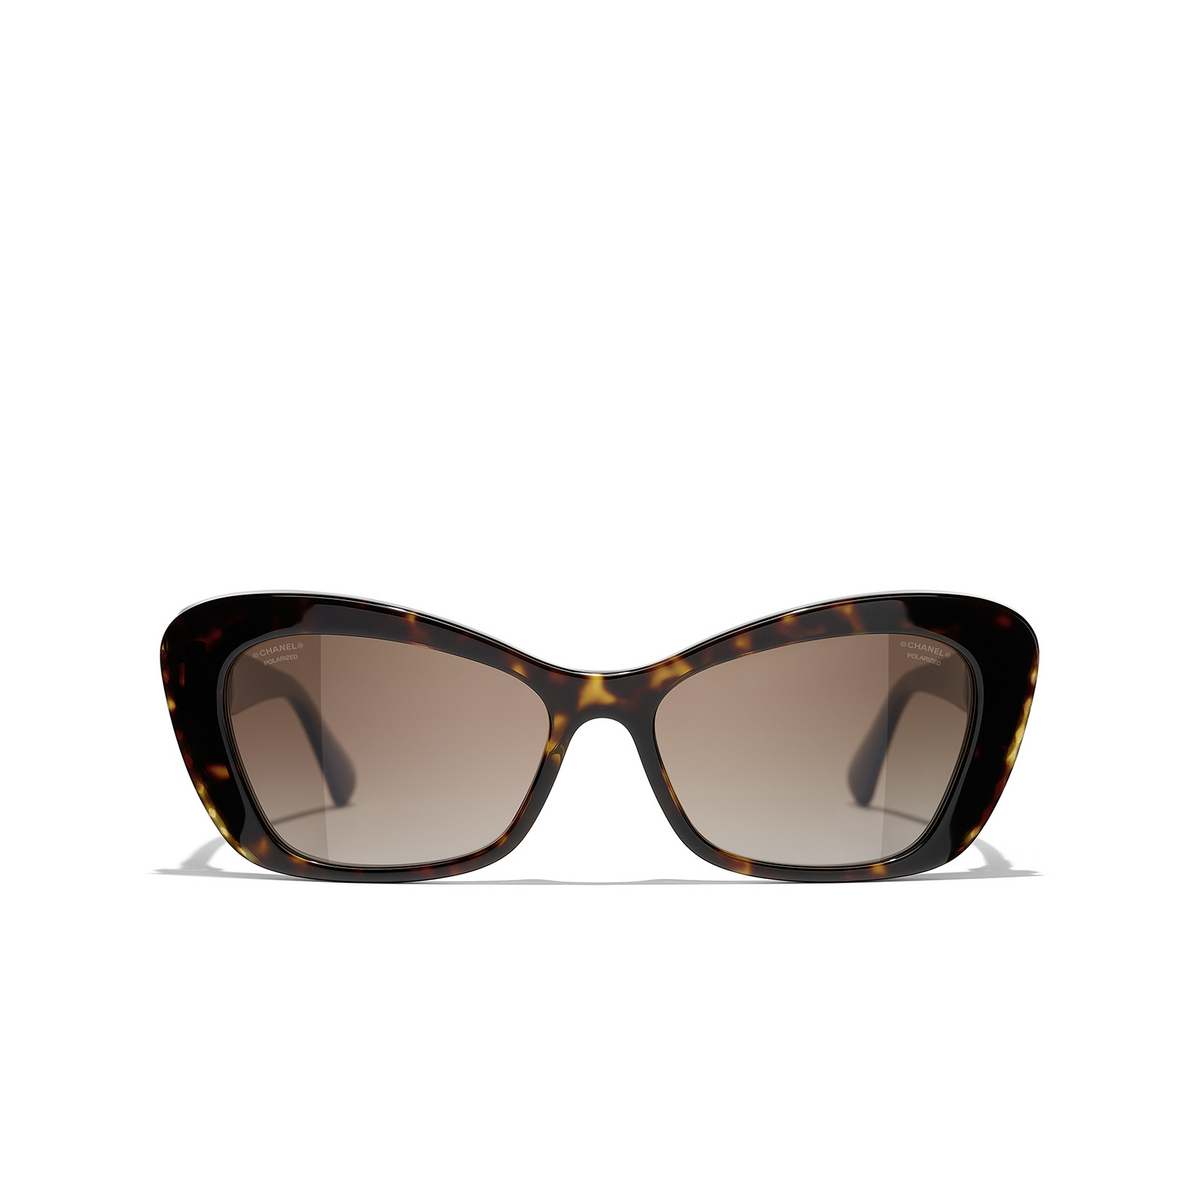 CHANEL cateye Sunglasses C714S9 Dark Tortoise - front view